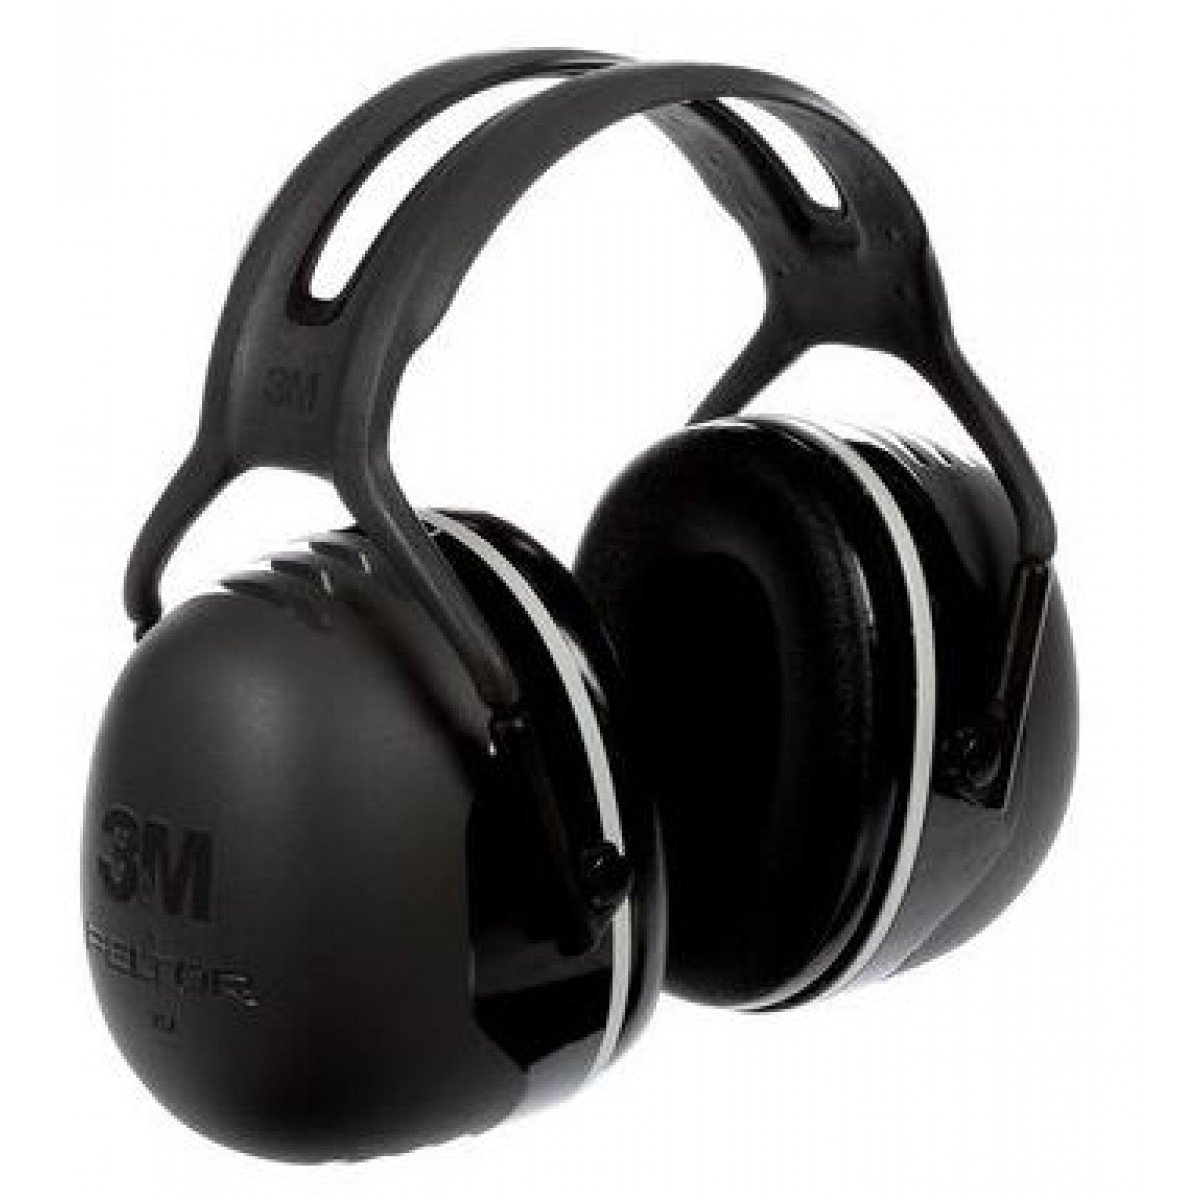 3M Peltor X5 Ear Defenders Headband